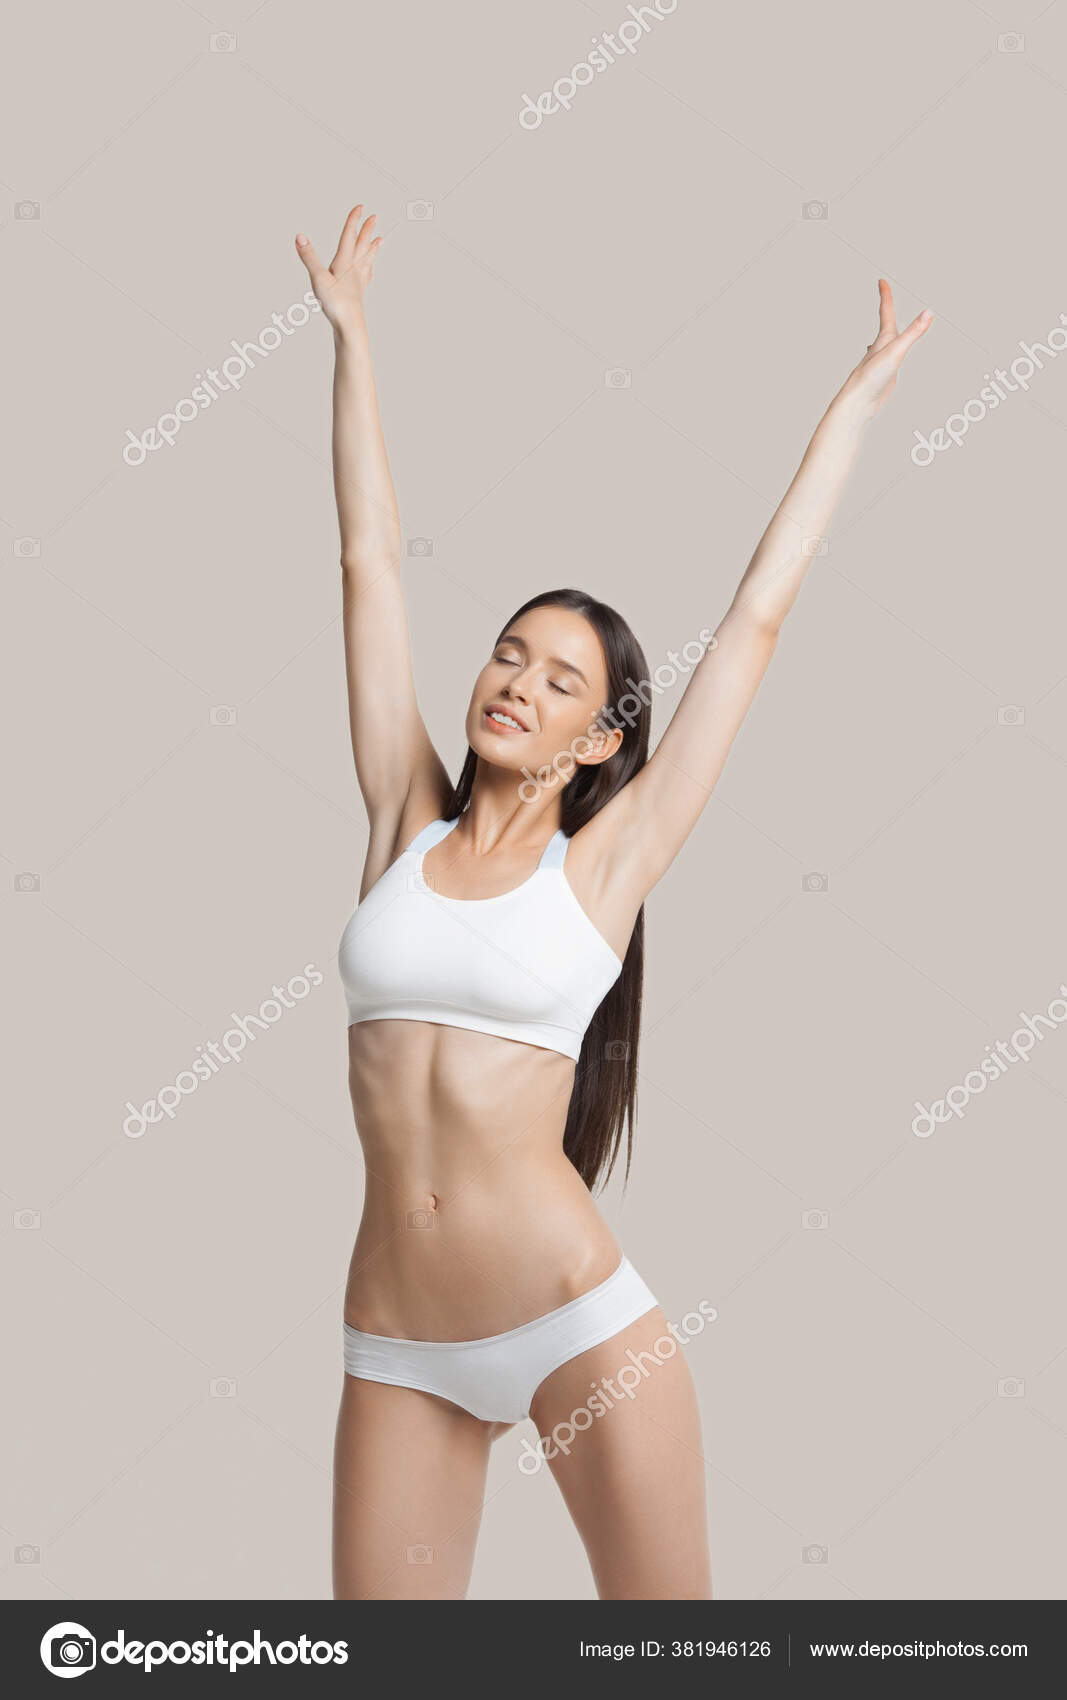 https://st4.depositphotos.com/18610578/38194/i/1600/depositphotos_381946126-stock-photo-slim-young-woman-underwear-stretches.jpg